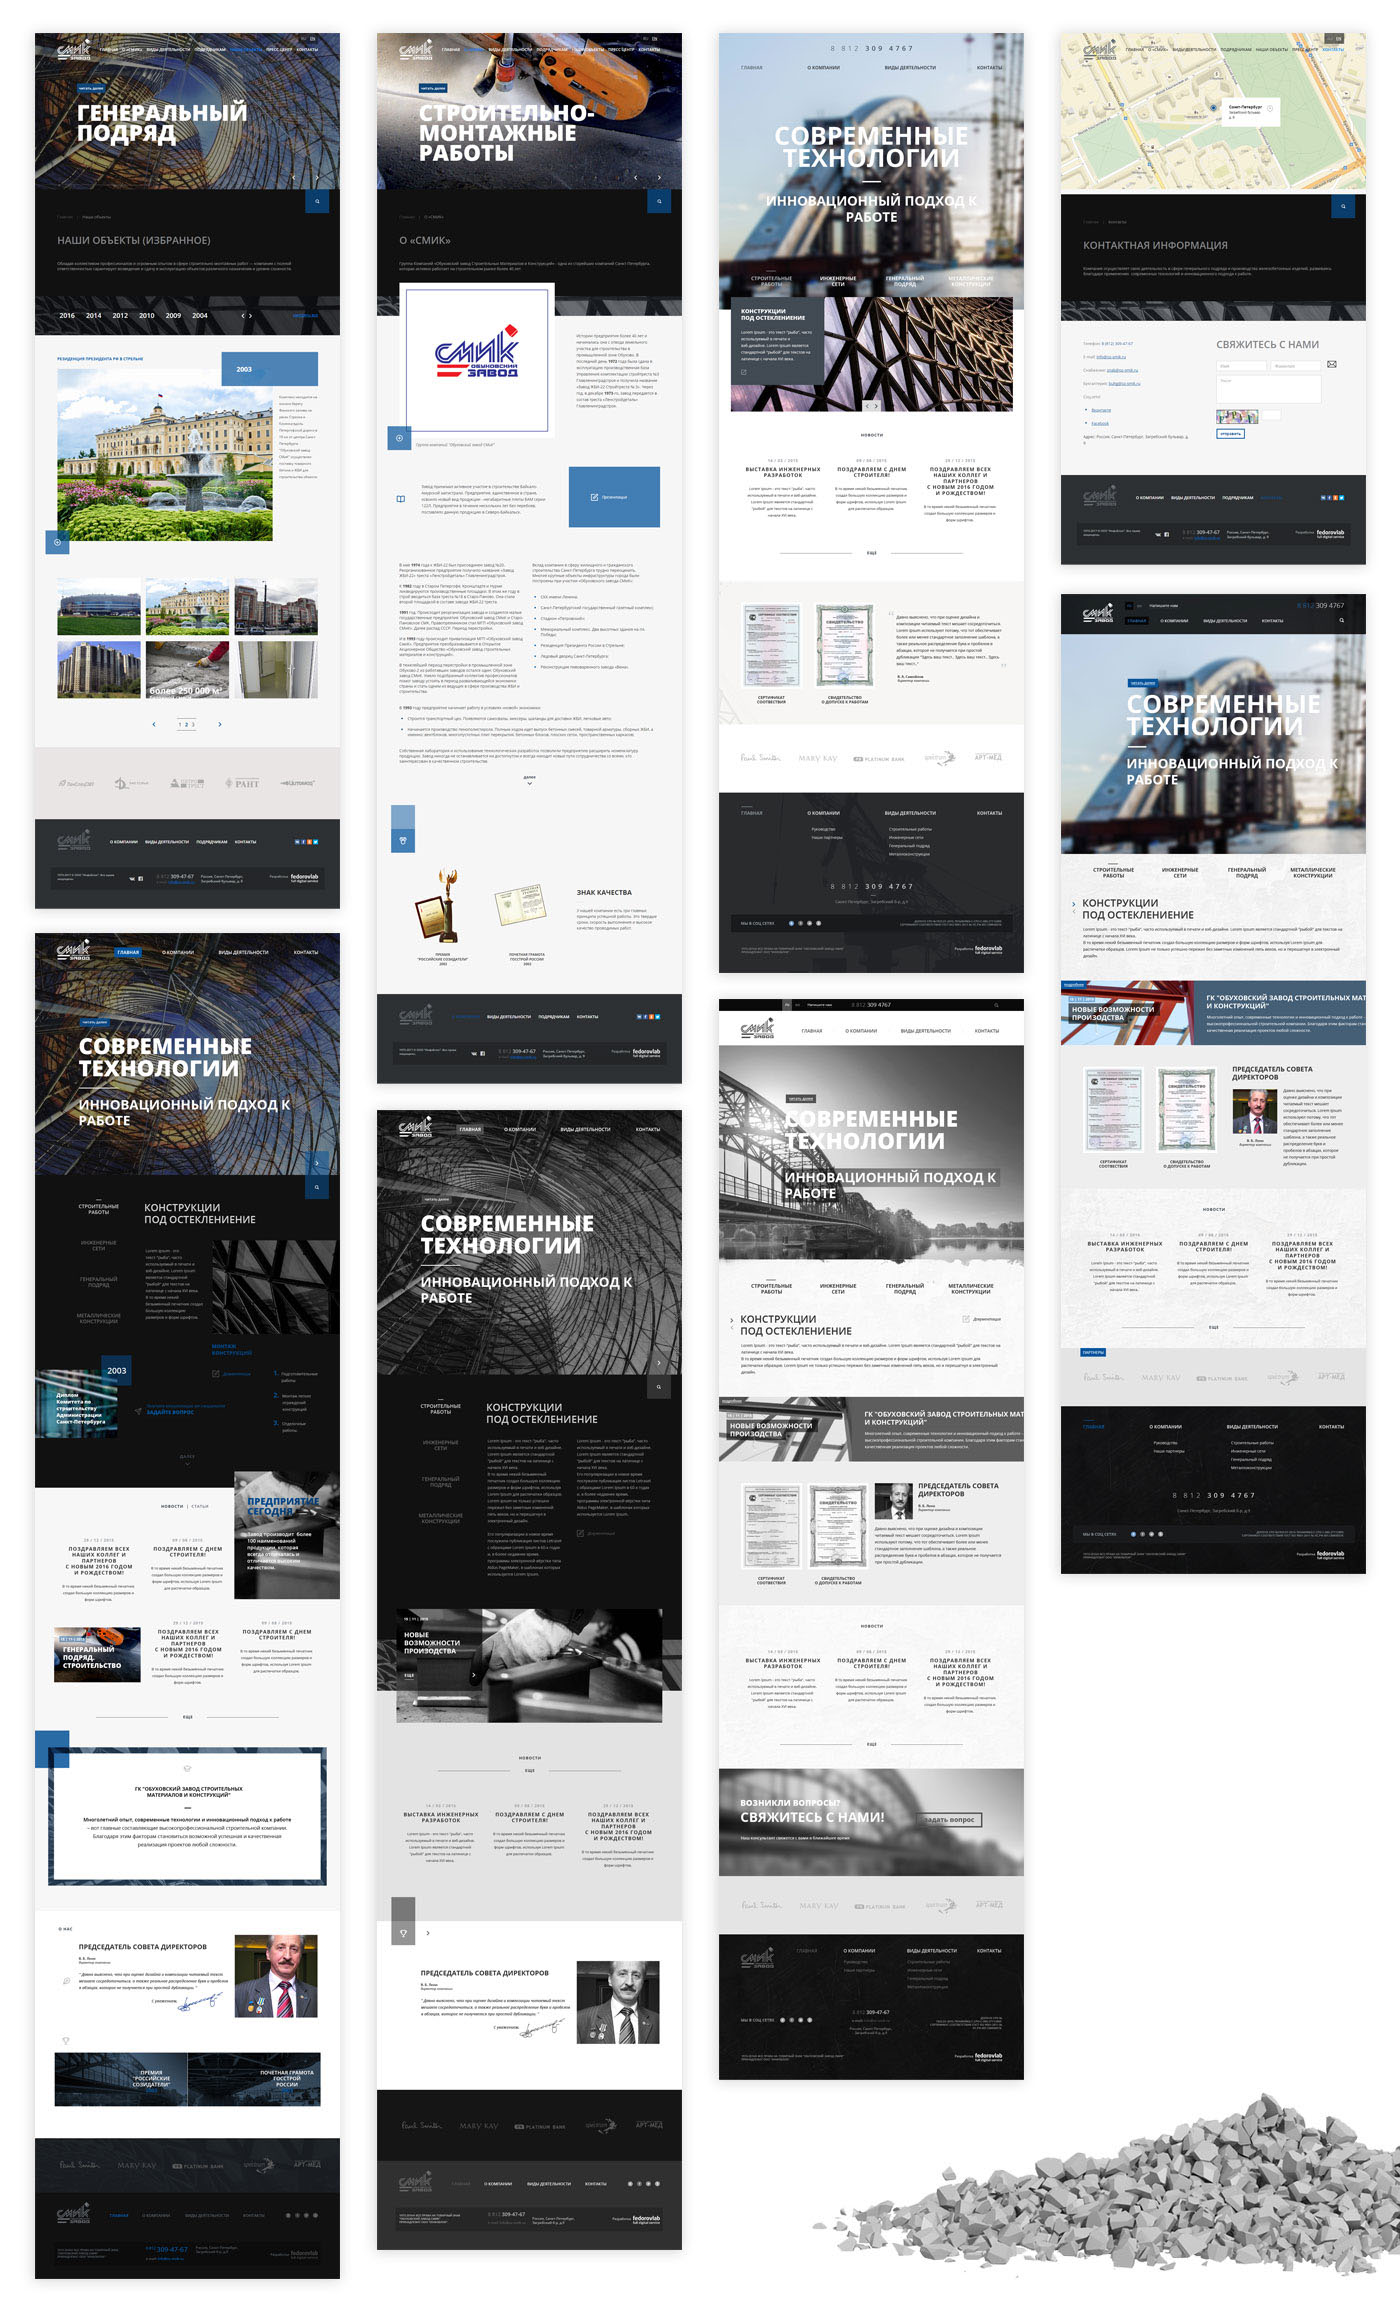 Website Webdesign guideline brand smik fedorovlab